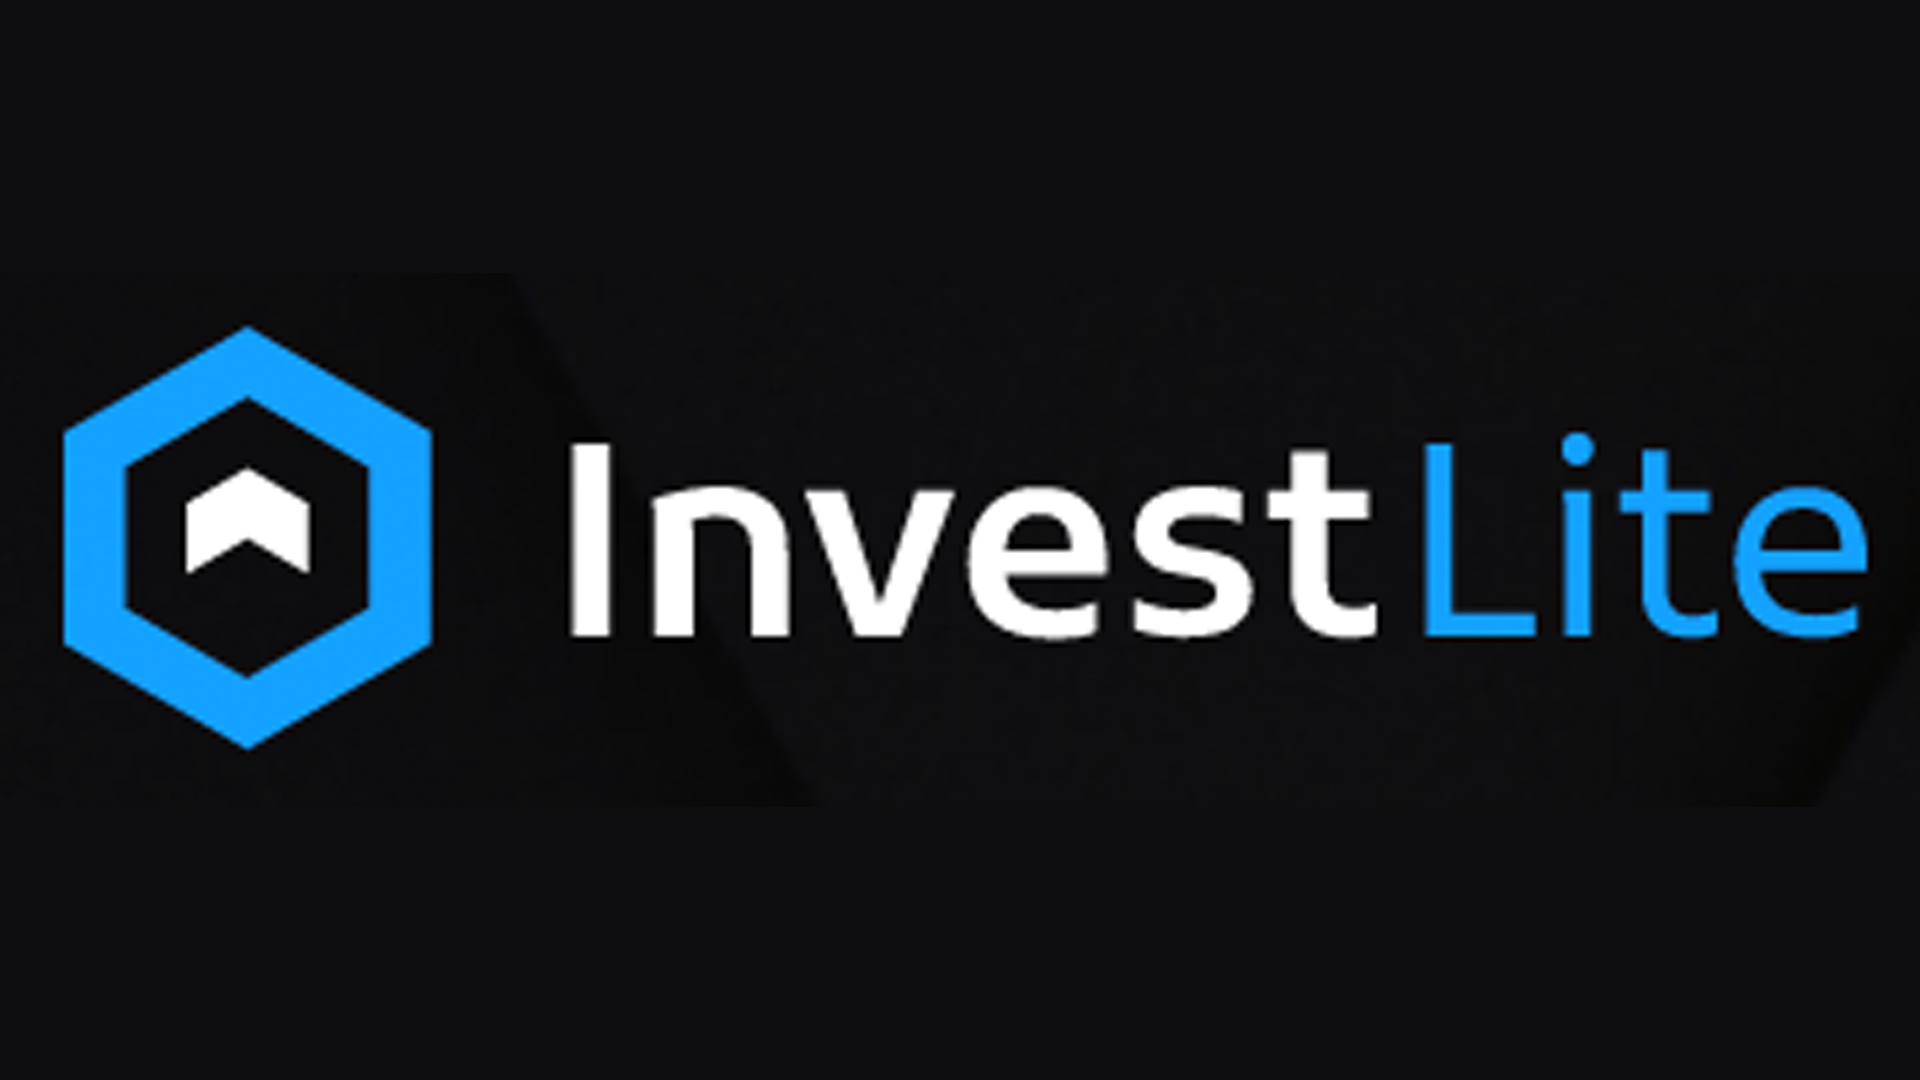 InvestLite – Do You Lose Money In The Stock Market?